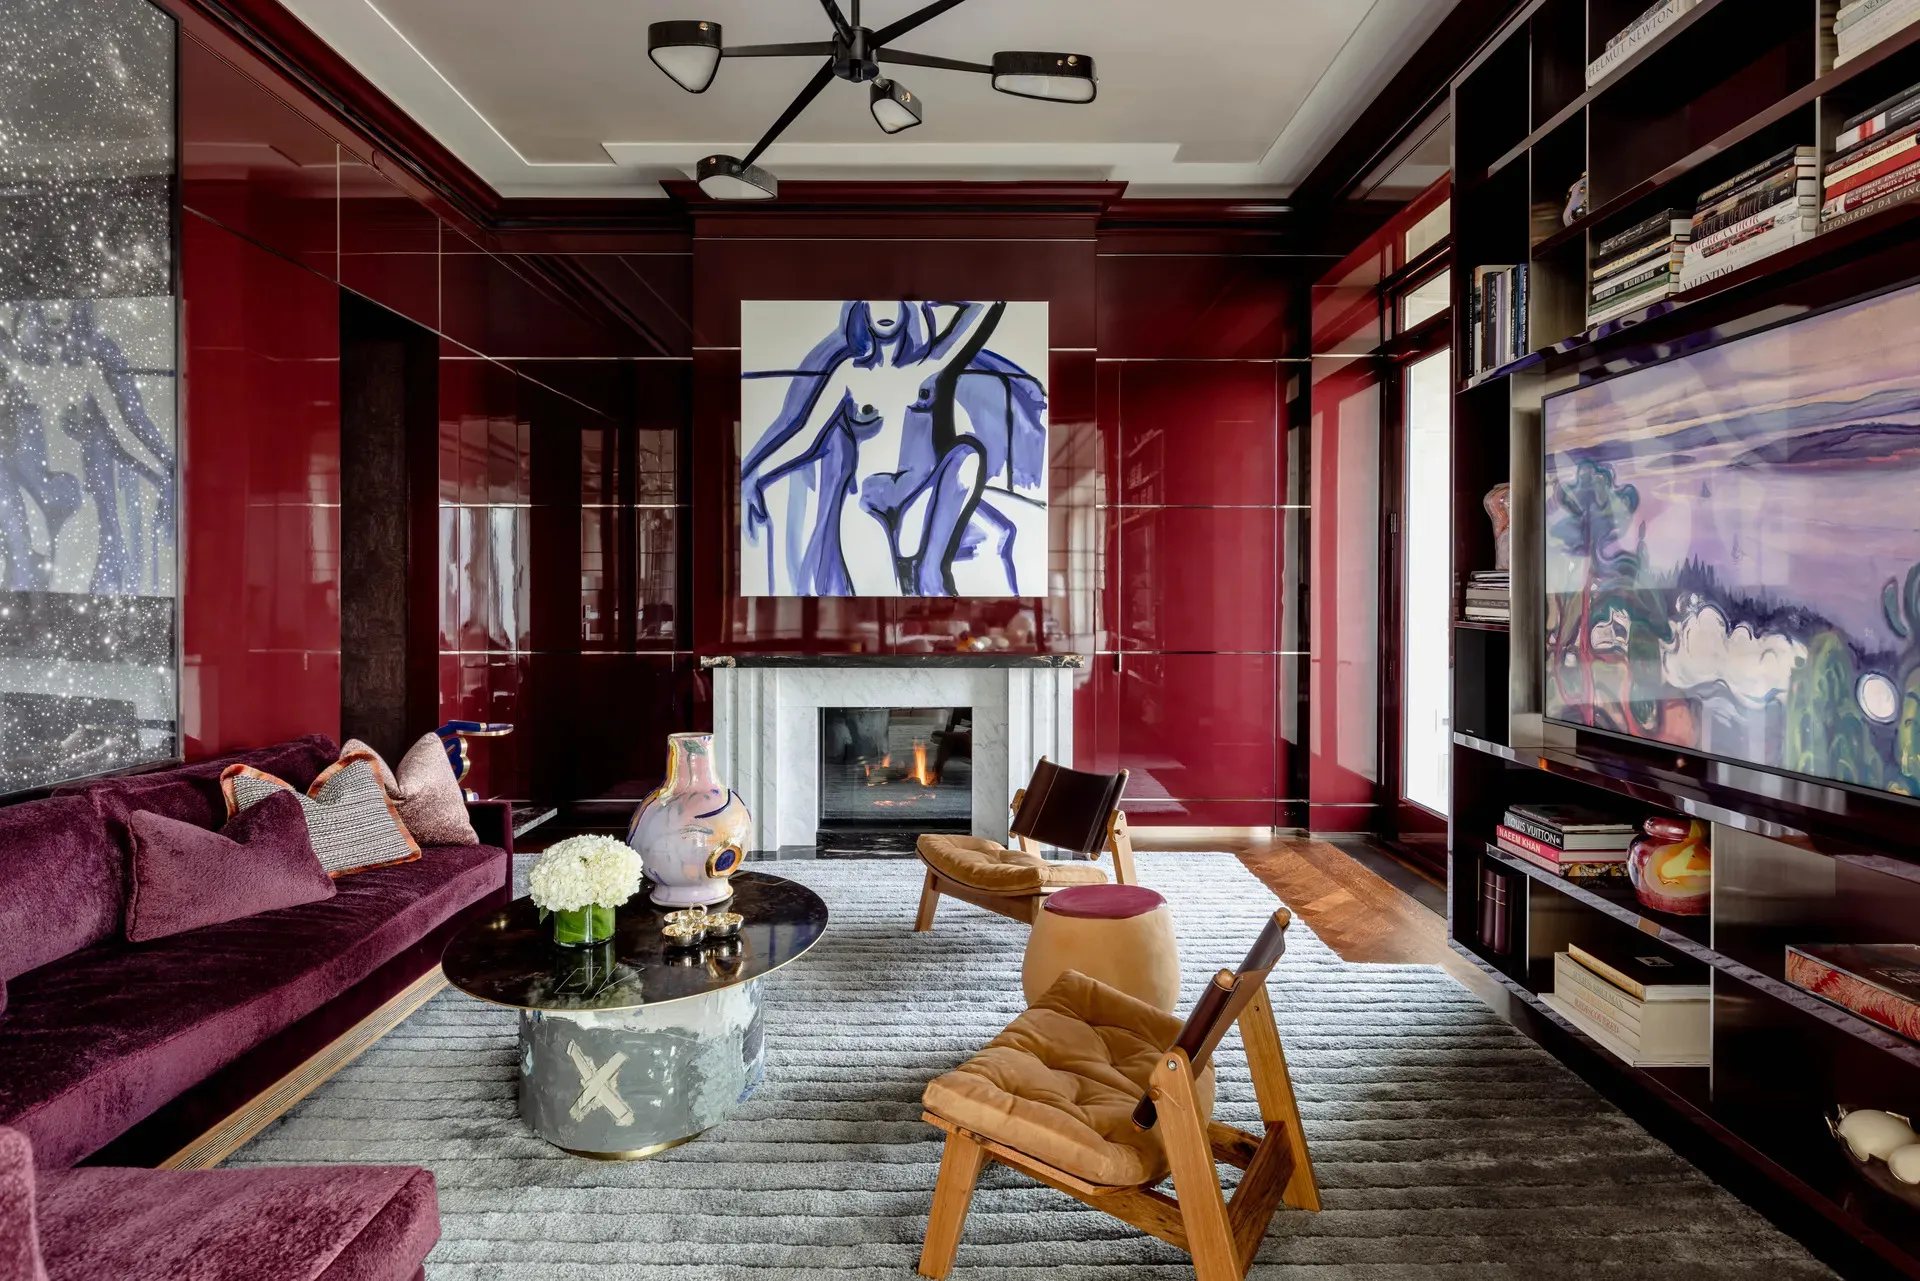 Louis Vuitton Neon Rug Bedroom Rug Floor Decor Home Decor